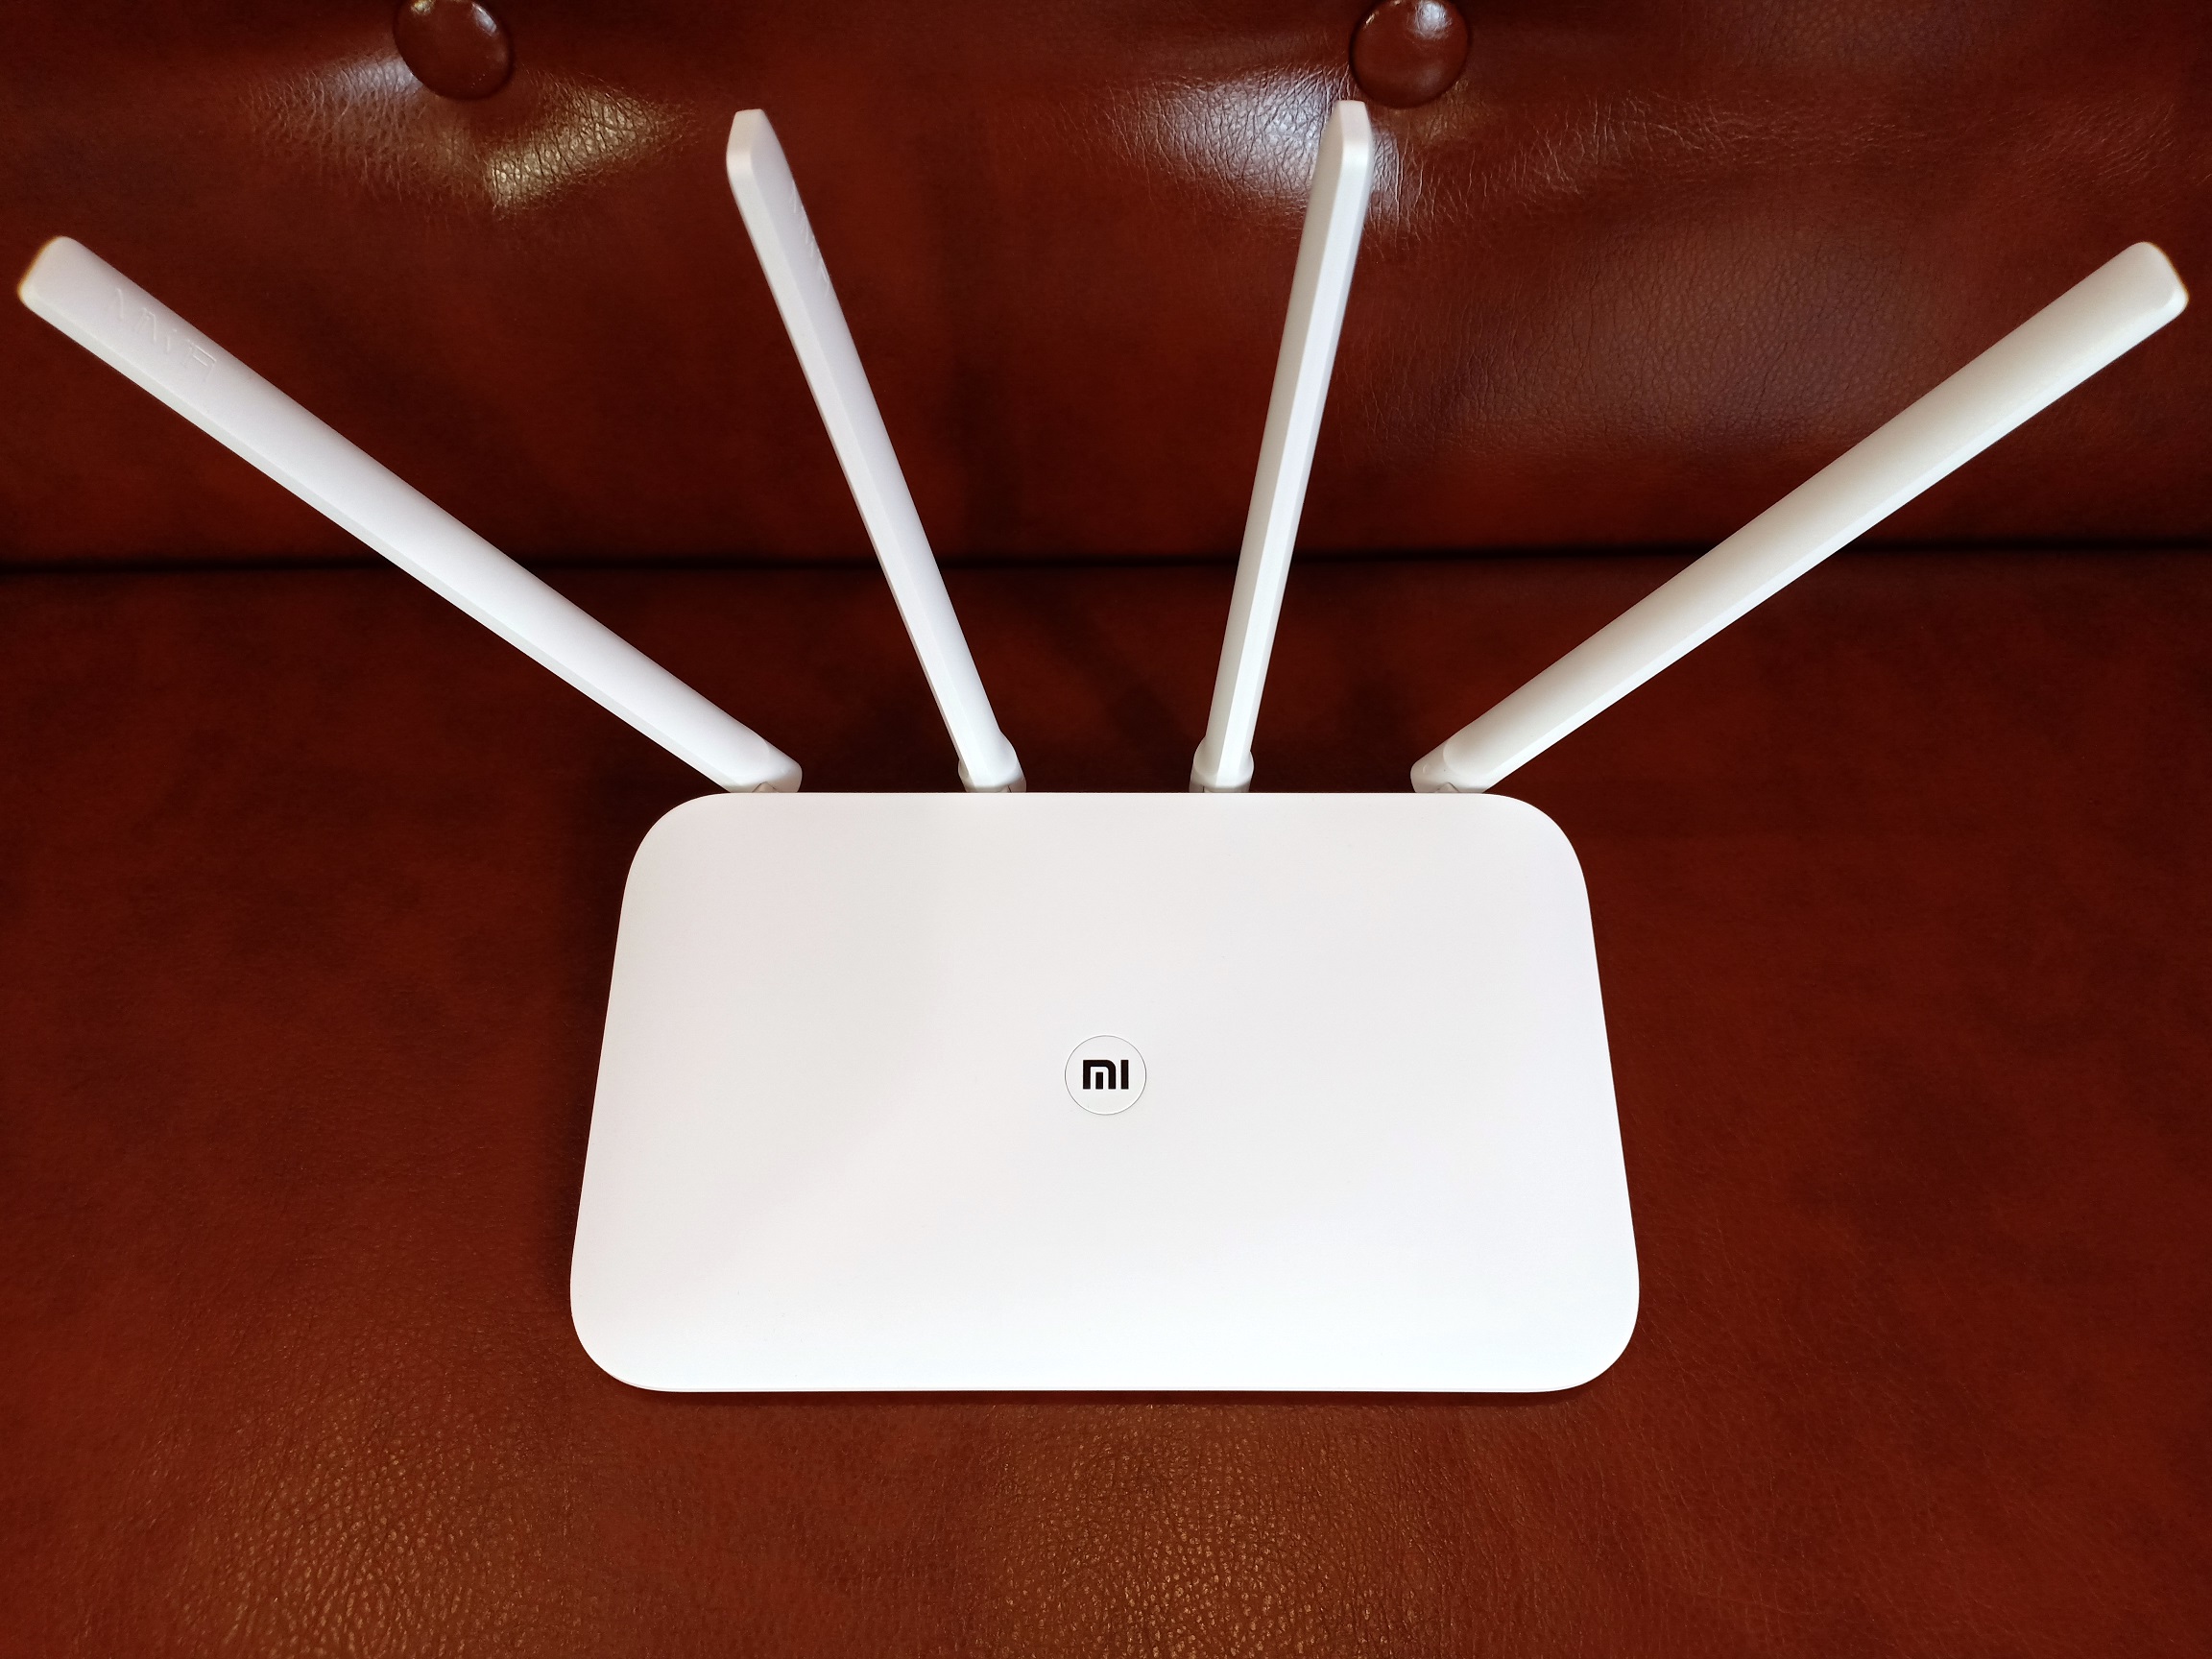 Mi wifi router 4c. Xiaomi mi Wi-Fi Router 4c. Роутер Ксиаоми 4а. Роутер mi WIFI Router 4a. Xiaomi mi WIFI Router 4c (4c).